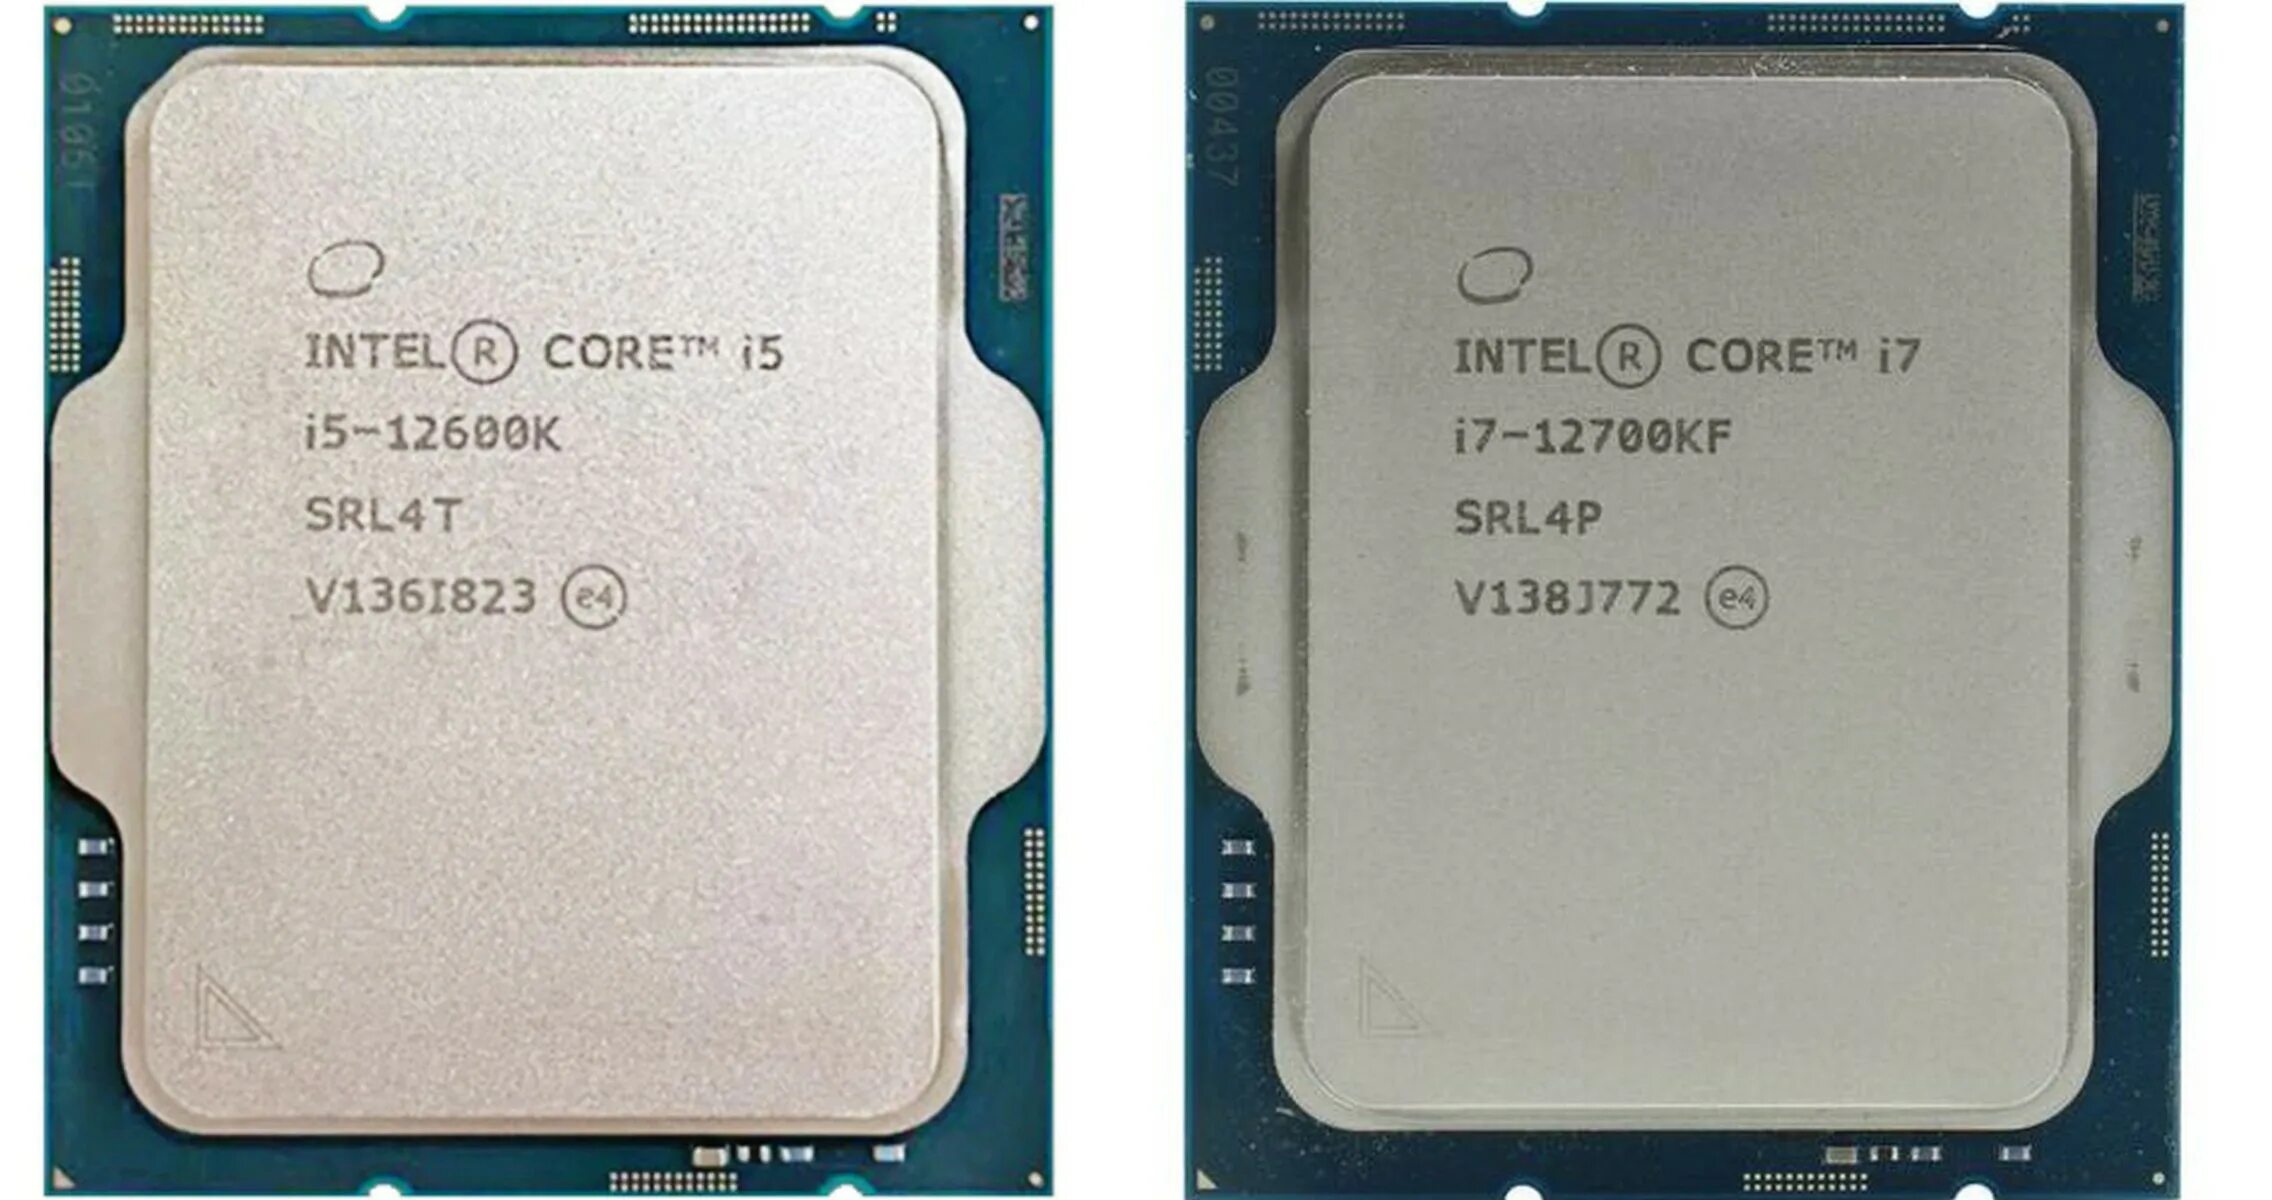 12600f. Процессор Intel Core i7-12700kf OEM. Intel Core i5 12600k. Процессор Intel i5-12600k. Процессор Intel Core i7-12700kf Box.